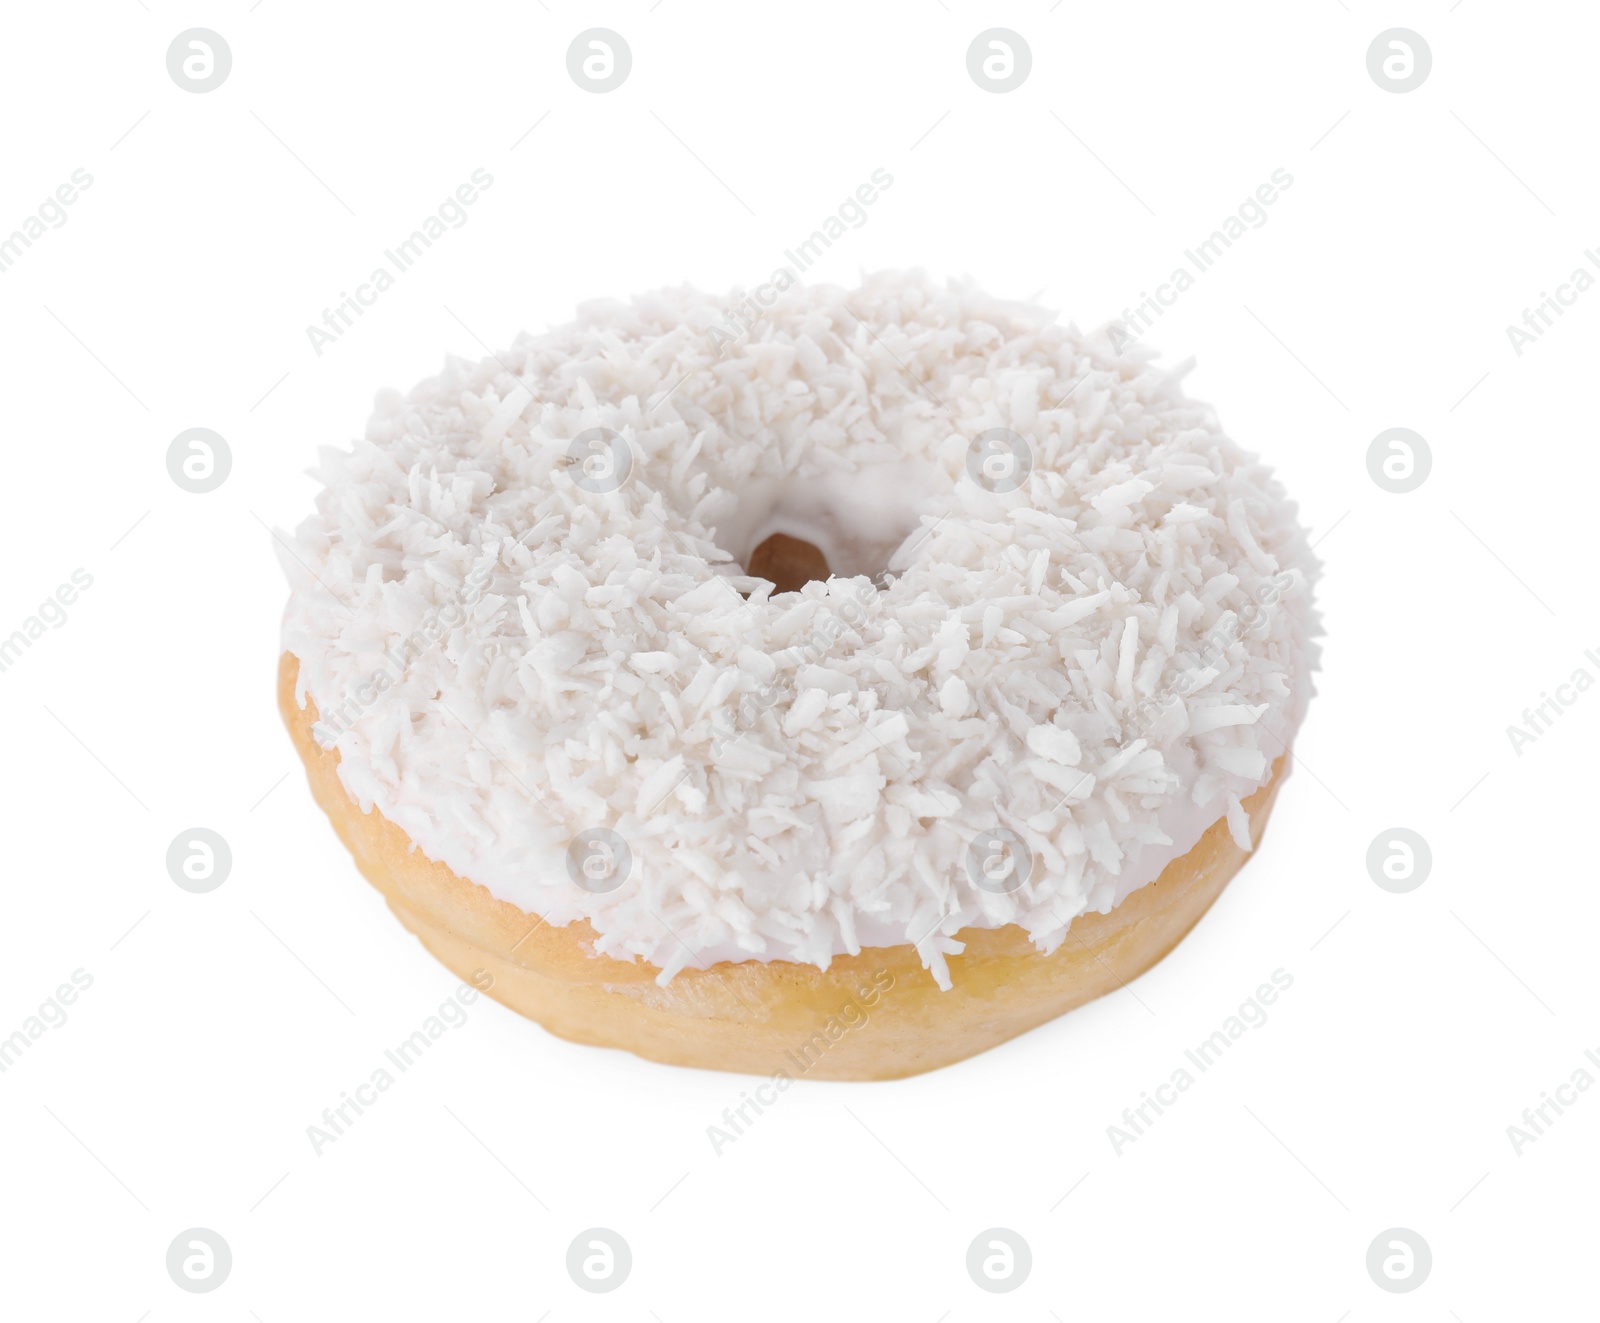 Photo of Tasty glazed donut with coconut shavings isolated on white